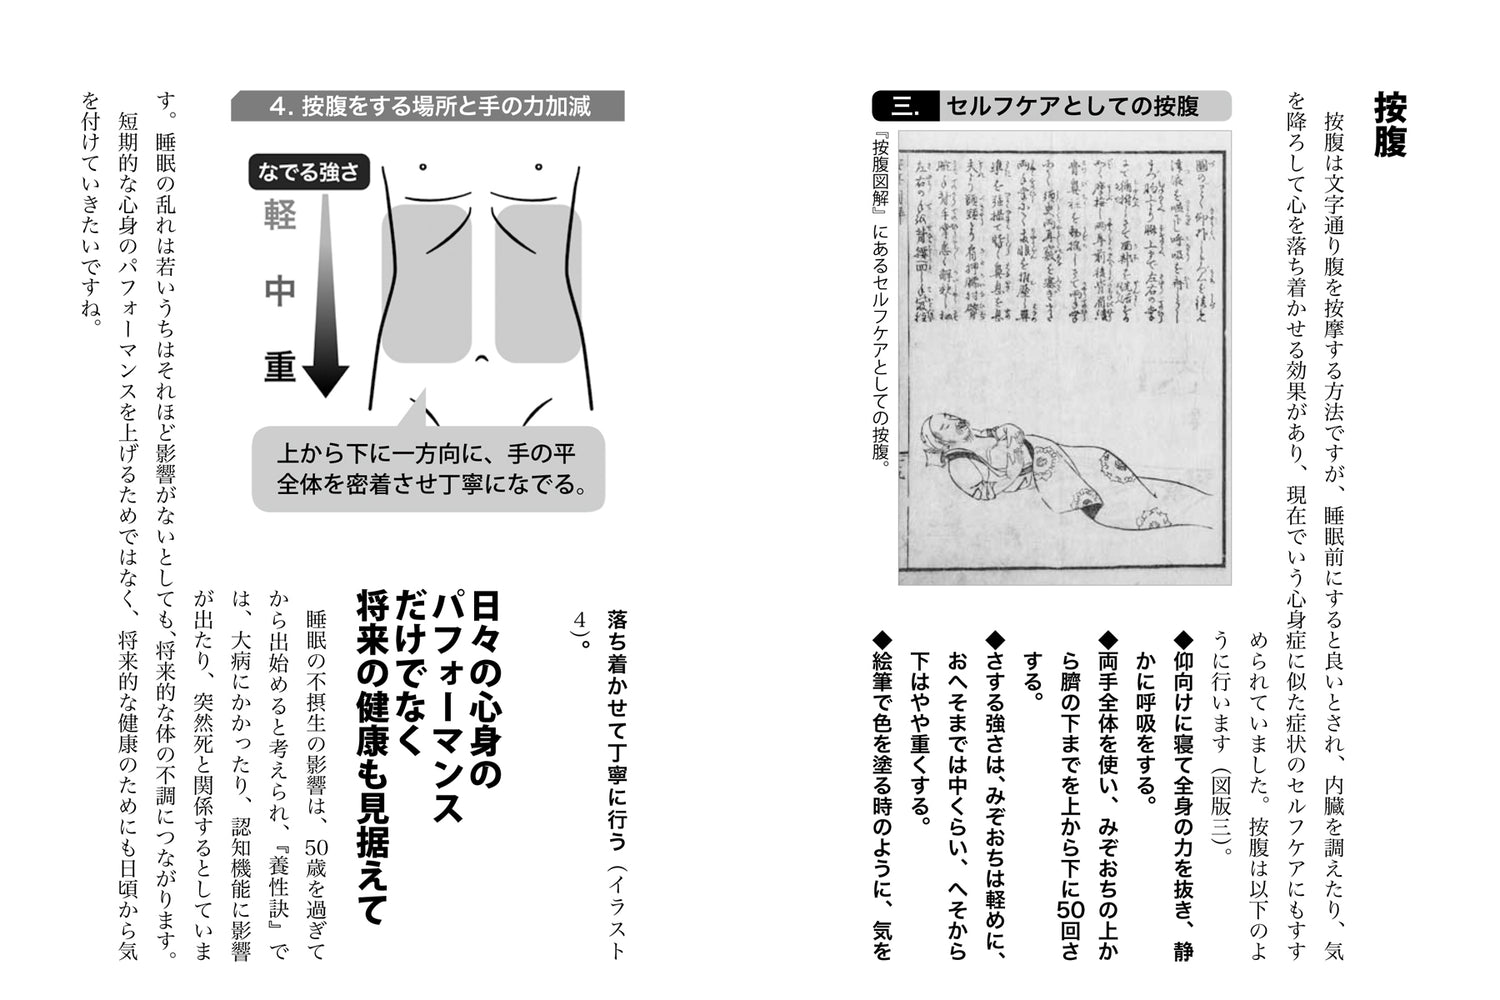 The Secret Samurai Regimen Book by Sozo Miyashita